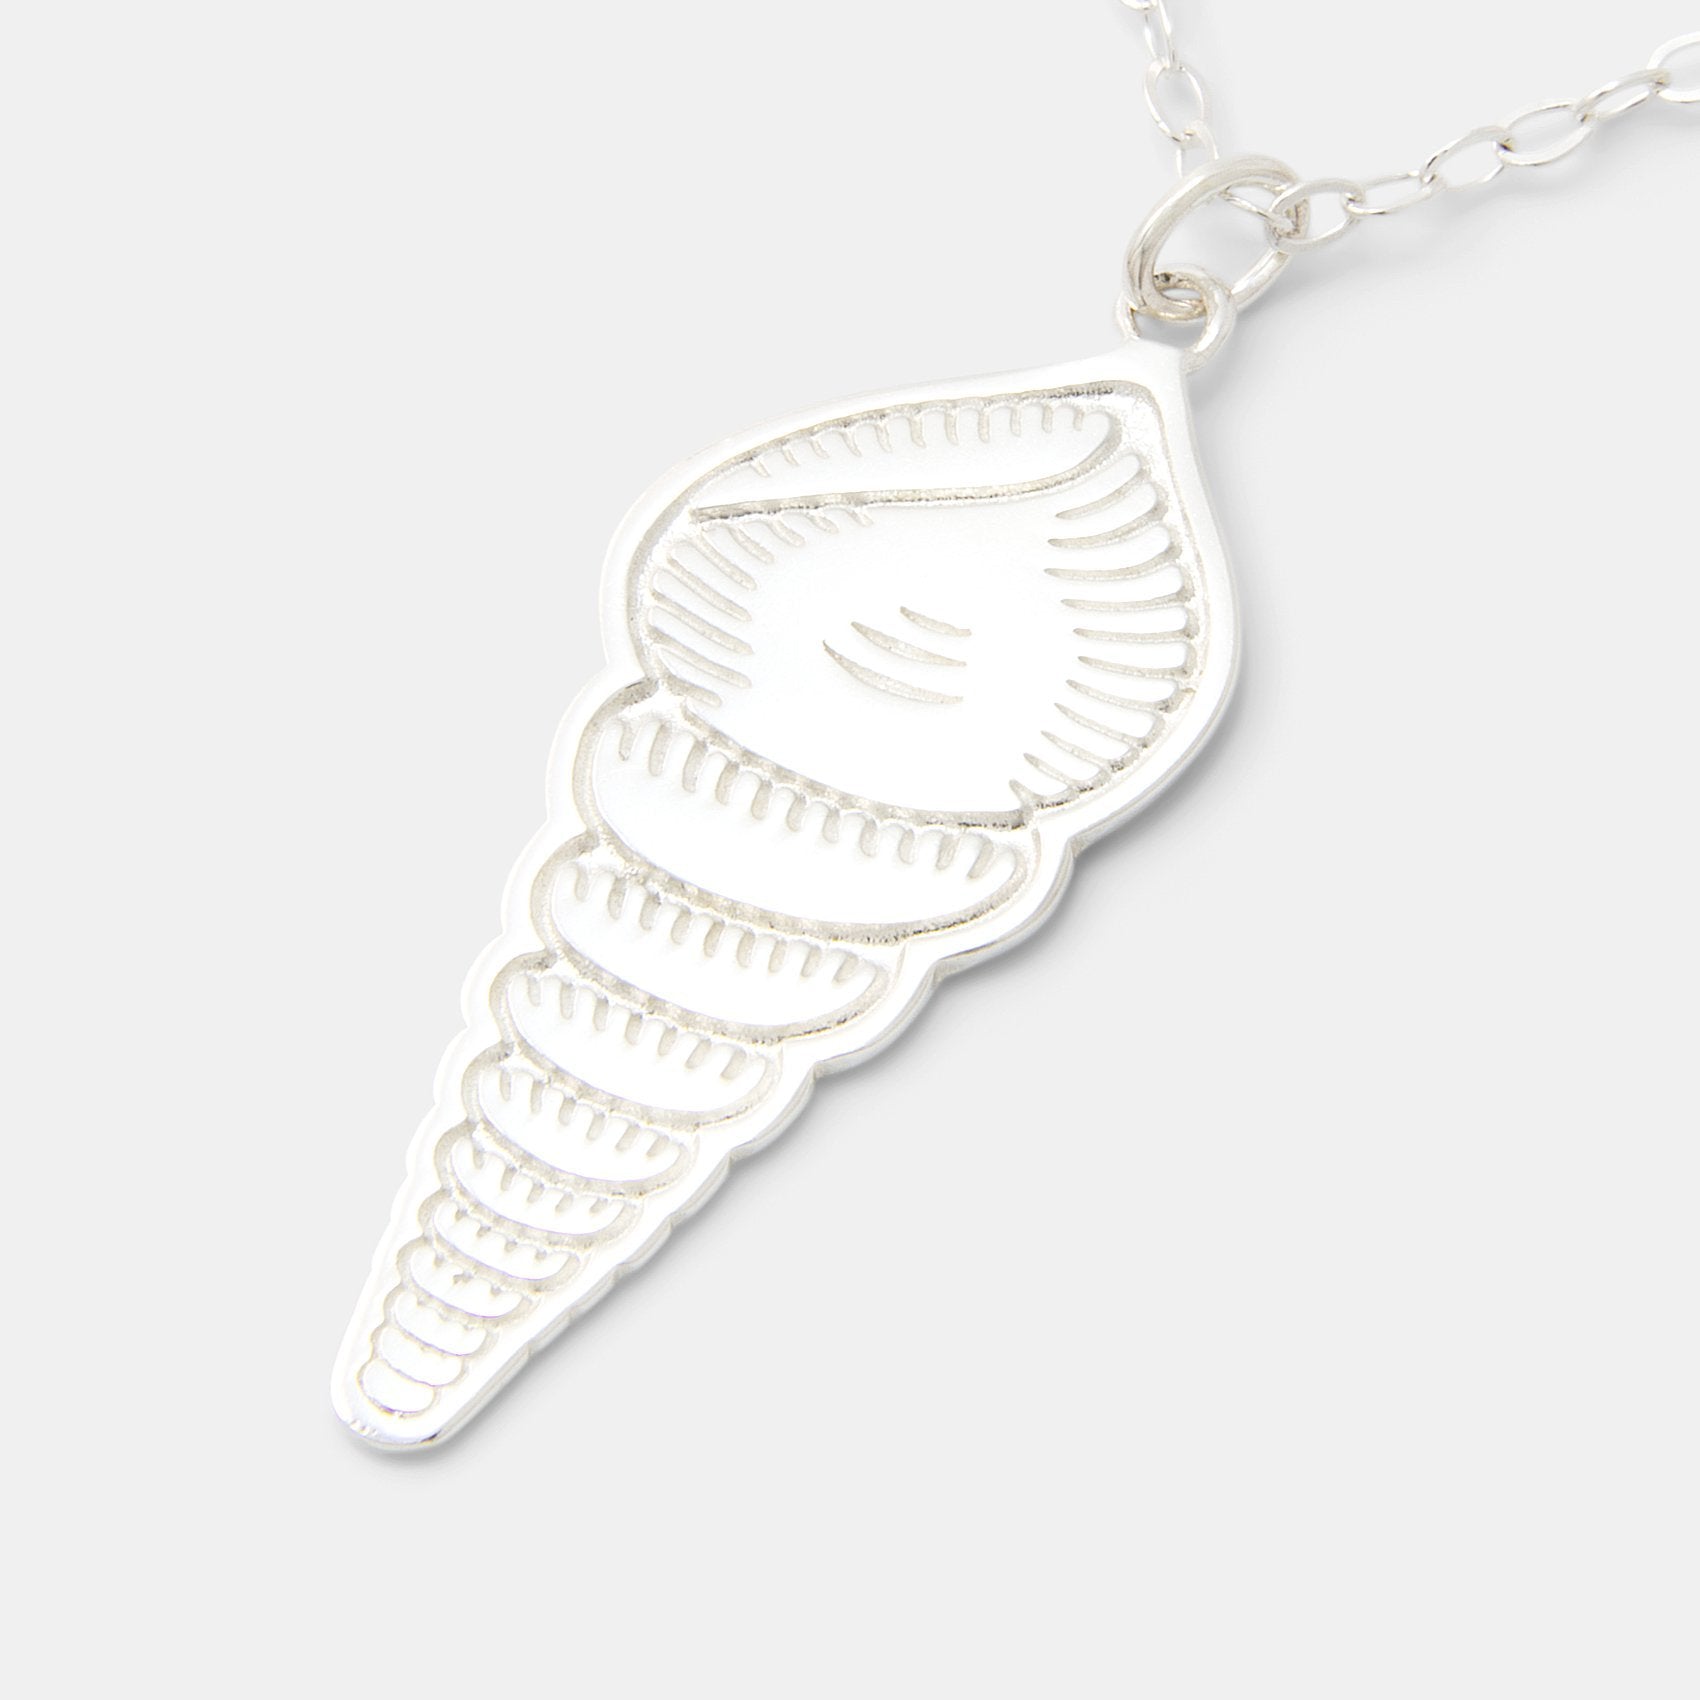 Spiral shell silver pendant necklace - Simone Walsh Jewellery Australia